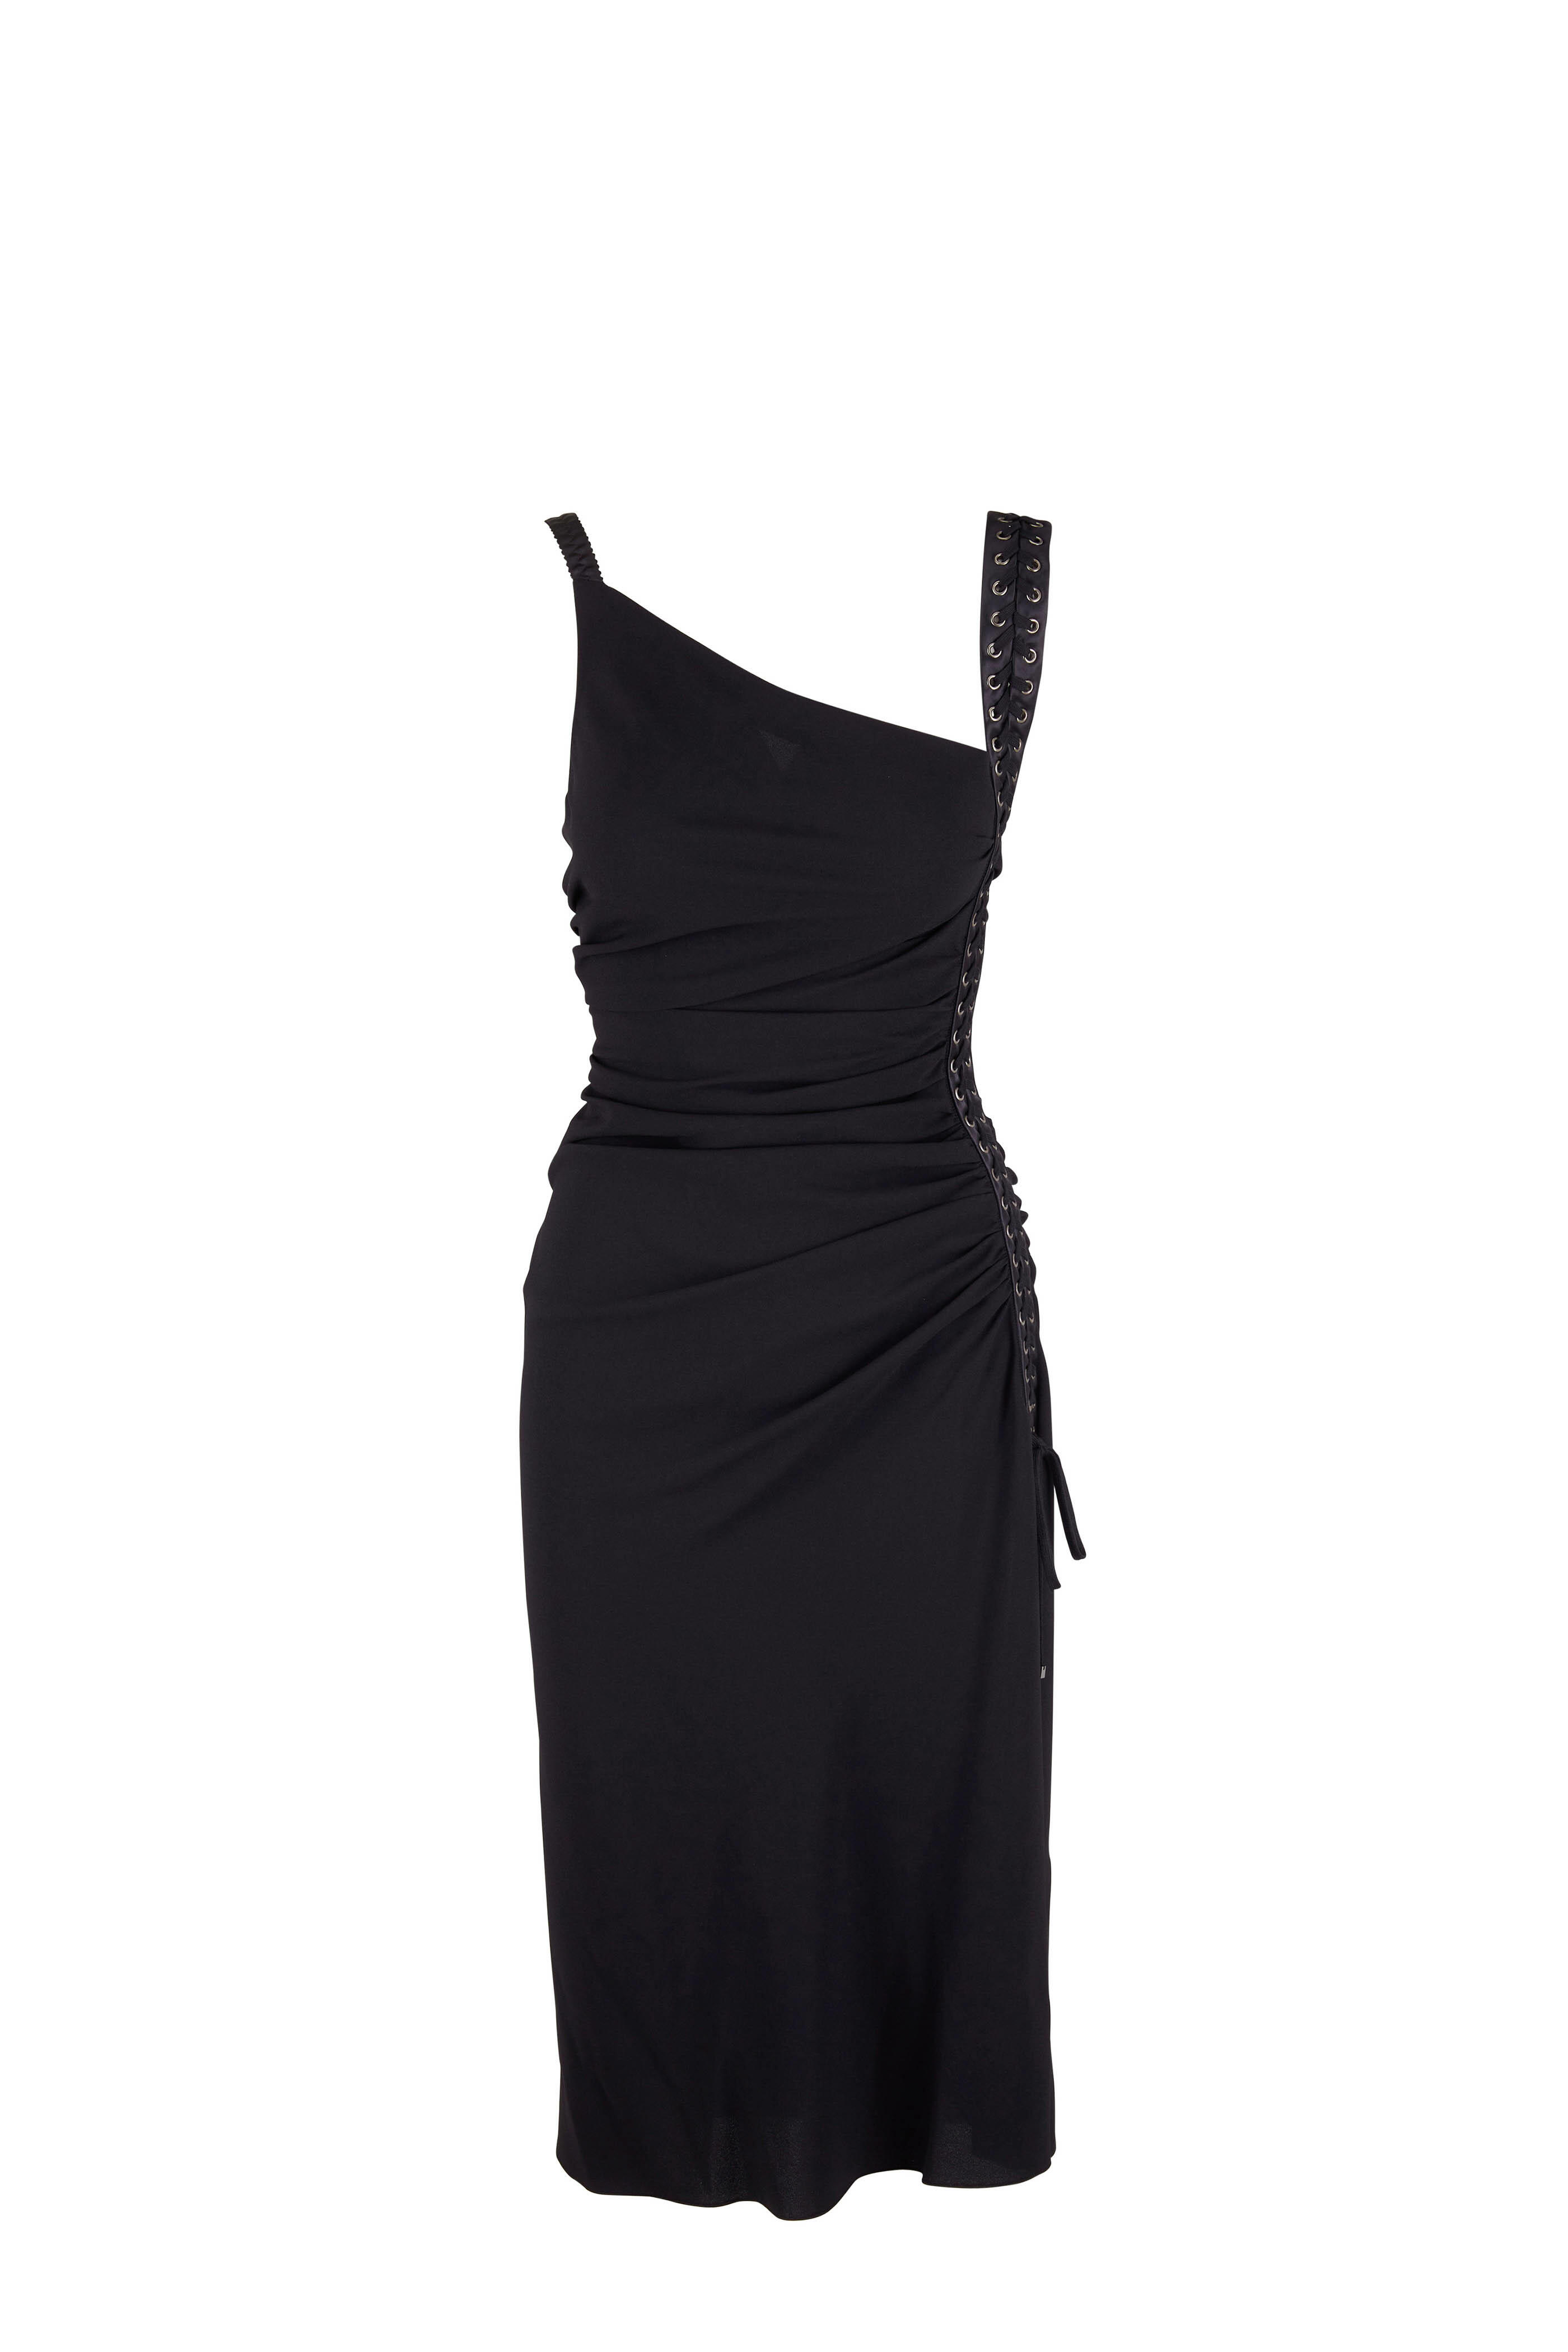 Dolce & Gabbana - Black Stretch Sable Lace & Eyelet Dress